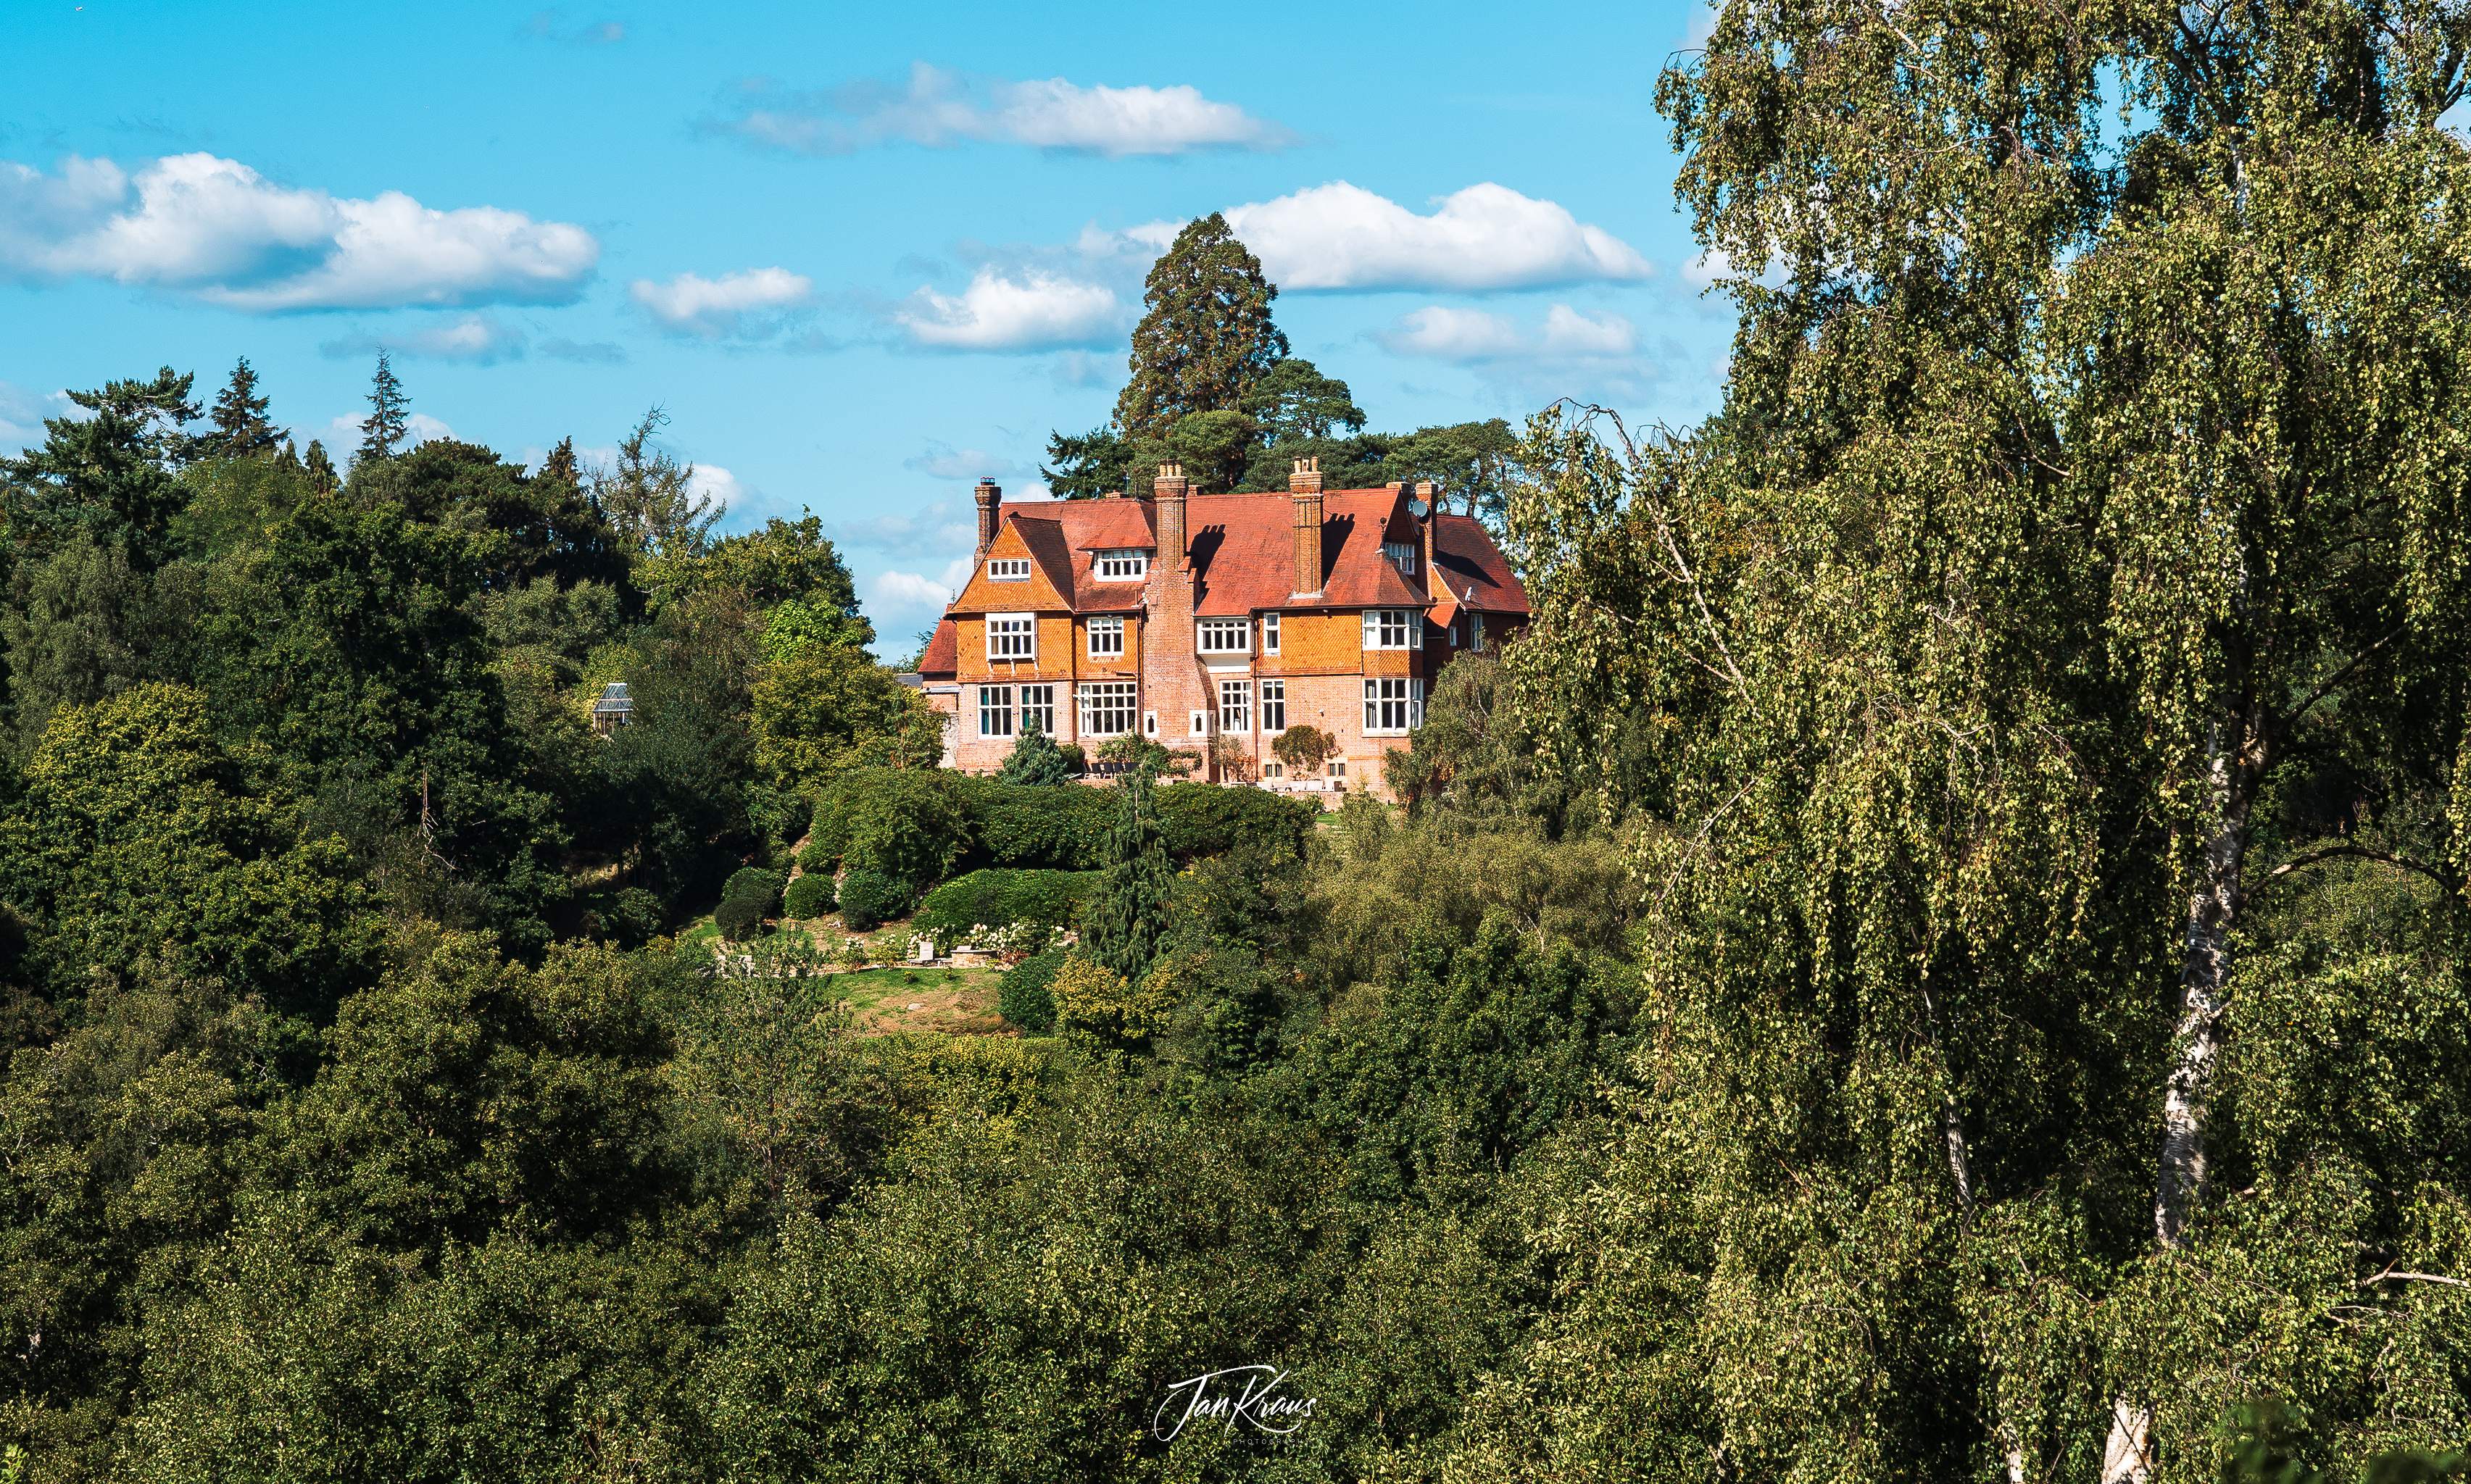 Views of Sanden Vineyard estate, East Sussex, England, UK